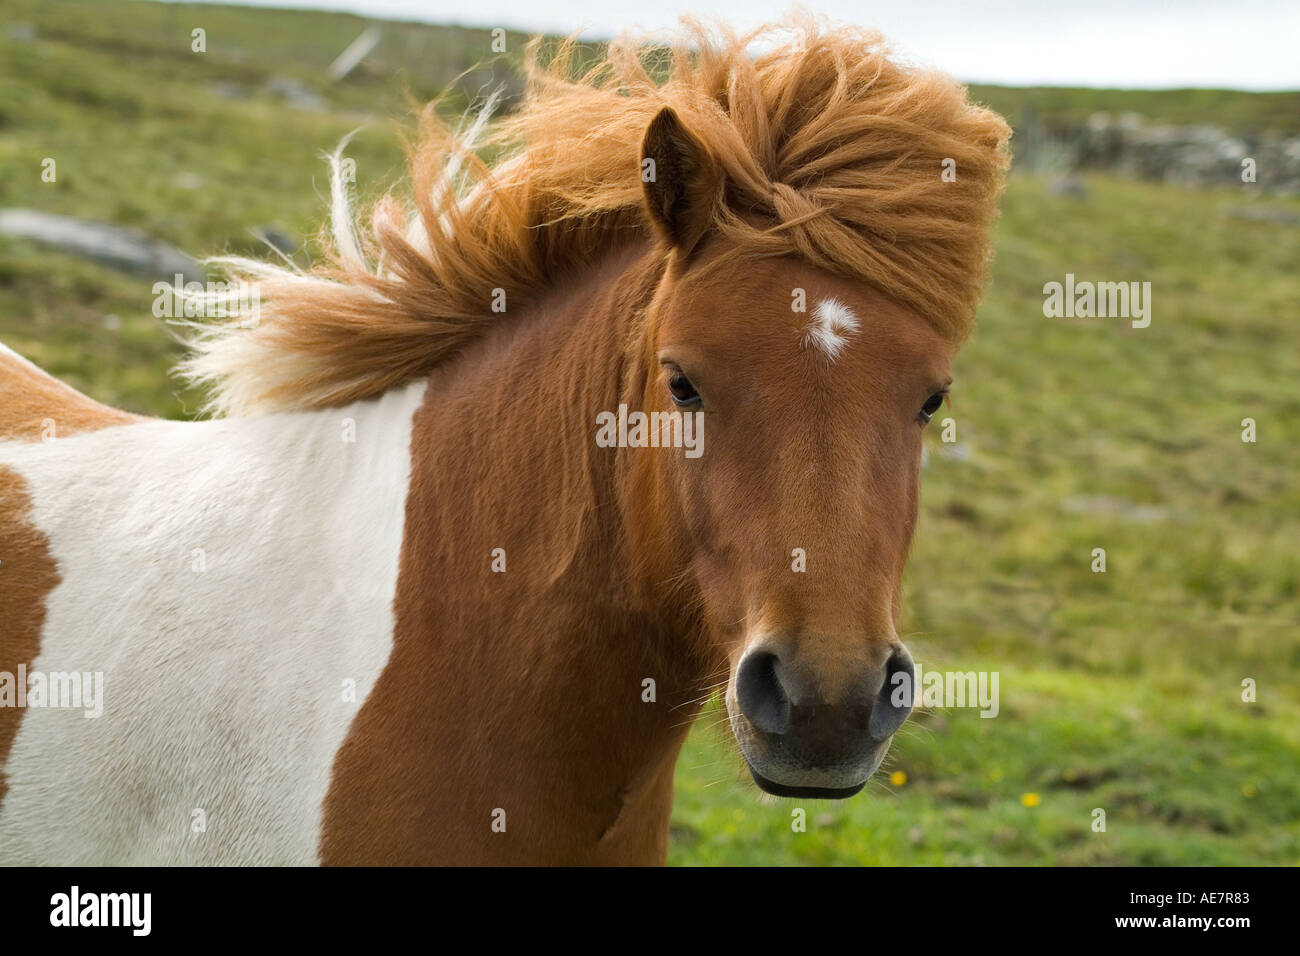 dh SHETLAND PONY UK Piebald shaggy haarige Ponys Kopf und Schultern Stammbaum Tier gezüchtet schottland Blick in die Kamera Stockfoto